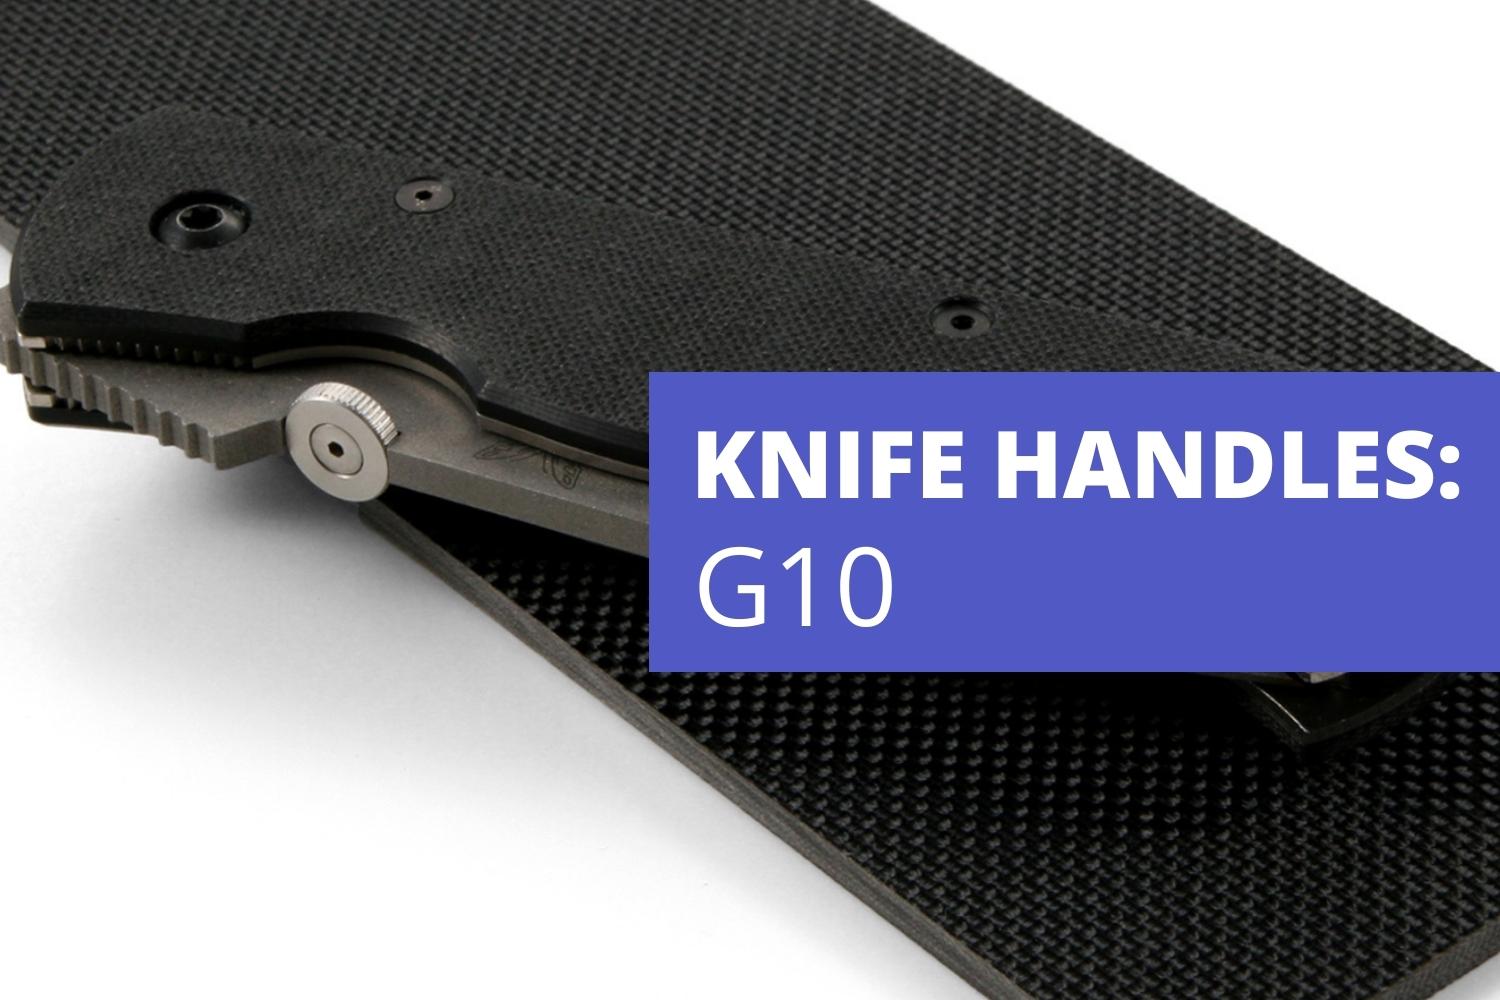 G10 - Knife Handle Materials